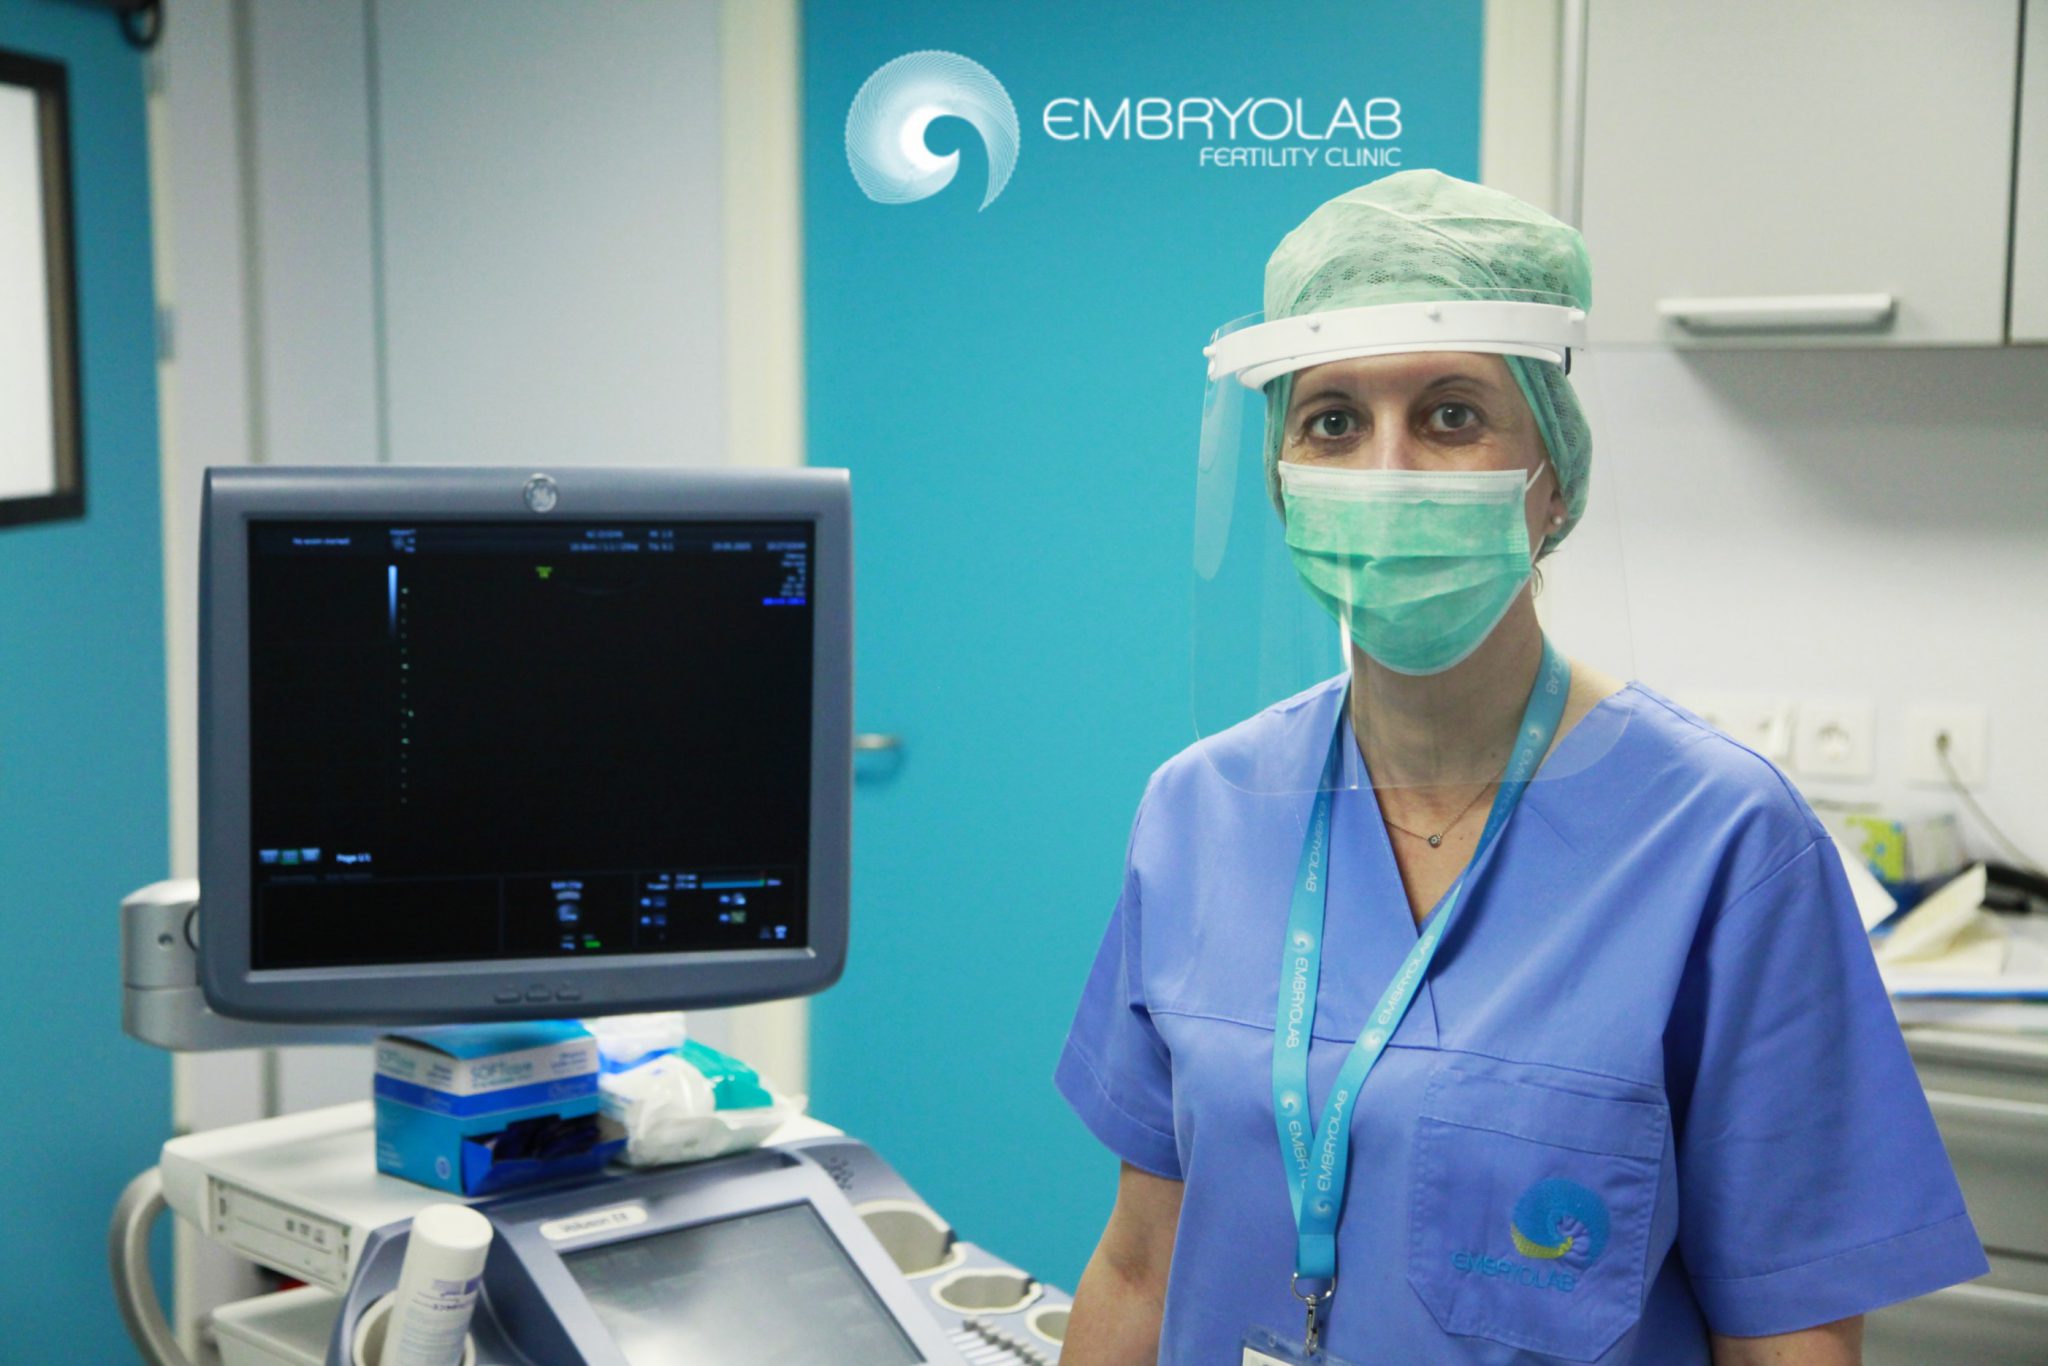 Embryolab operating room